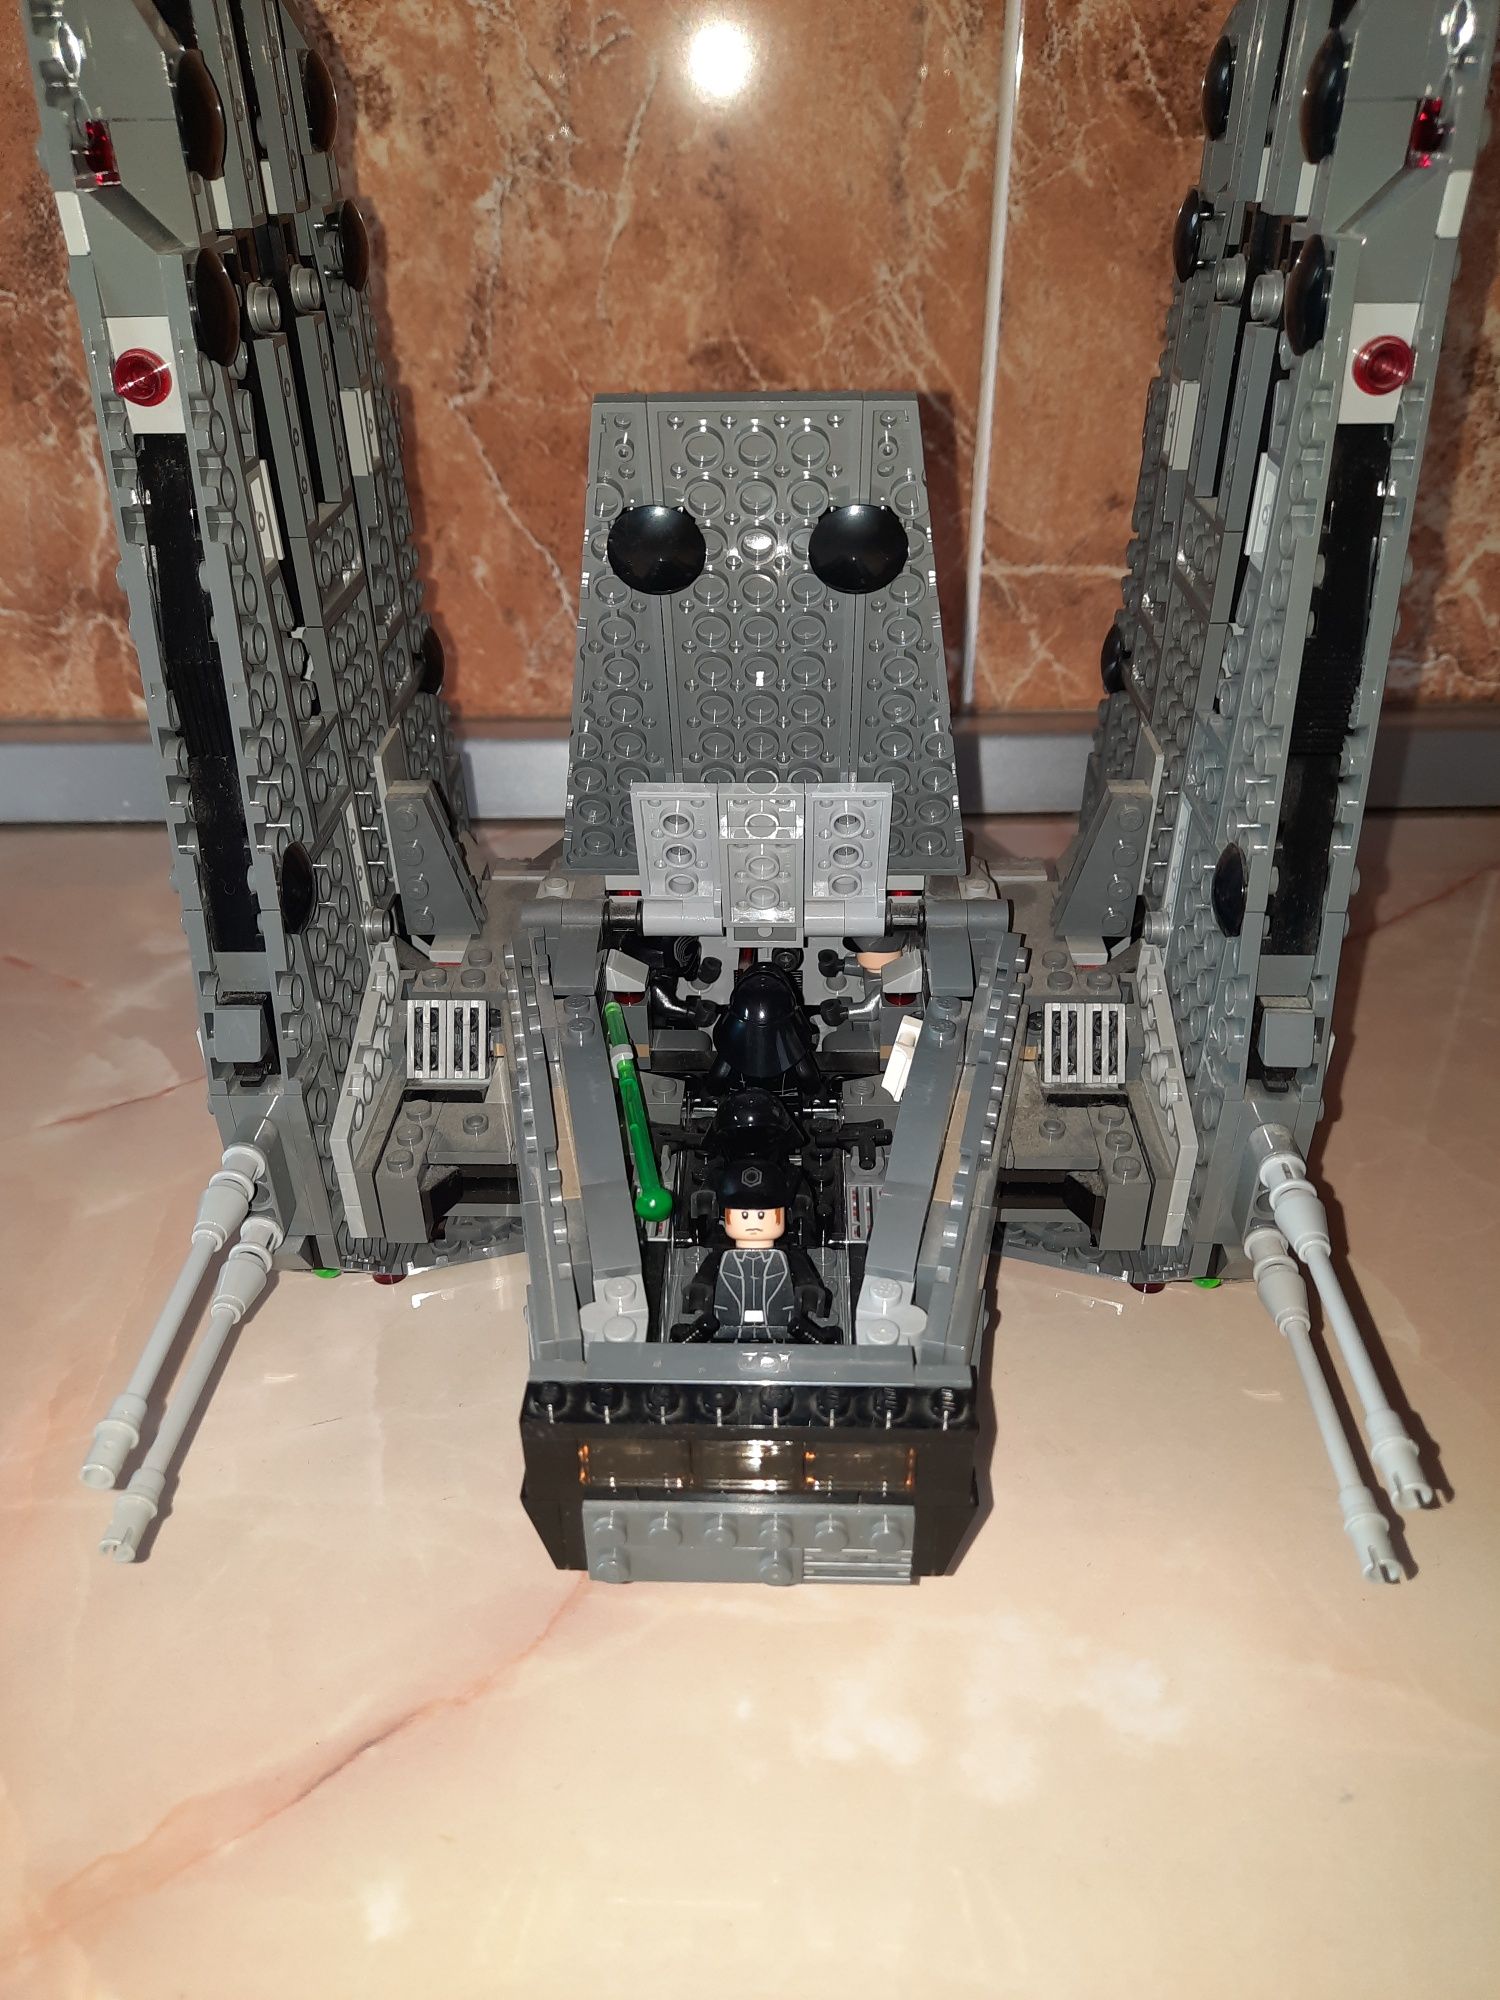 LEGO Star Wars asamblat